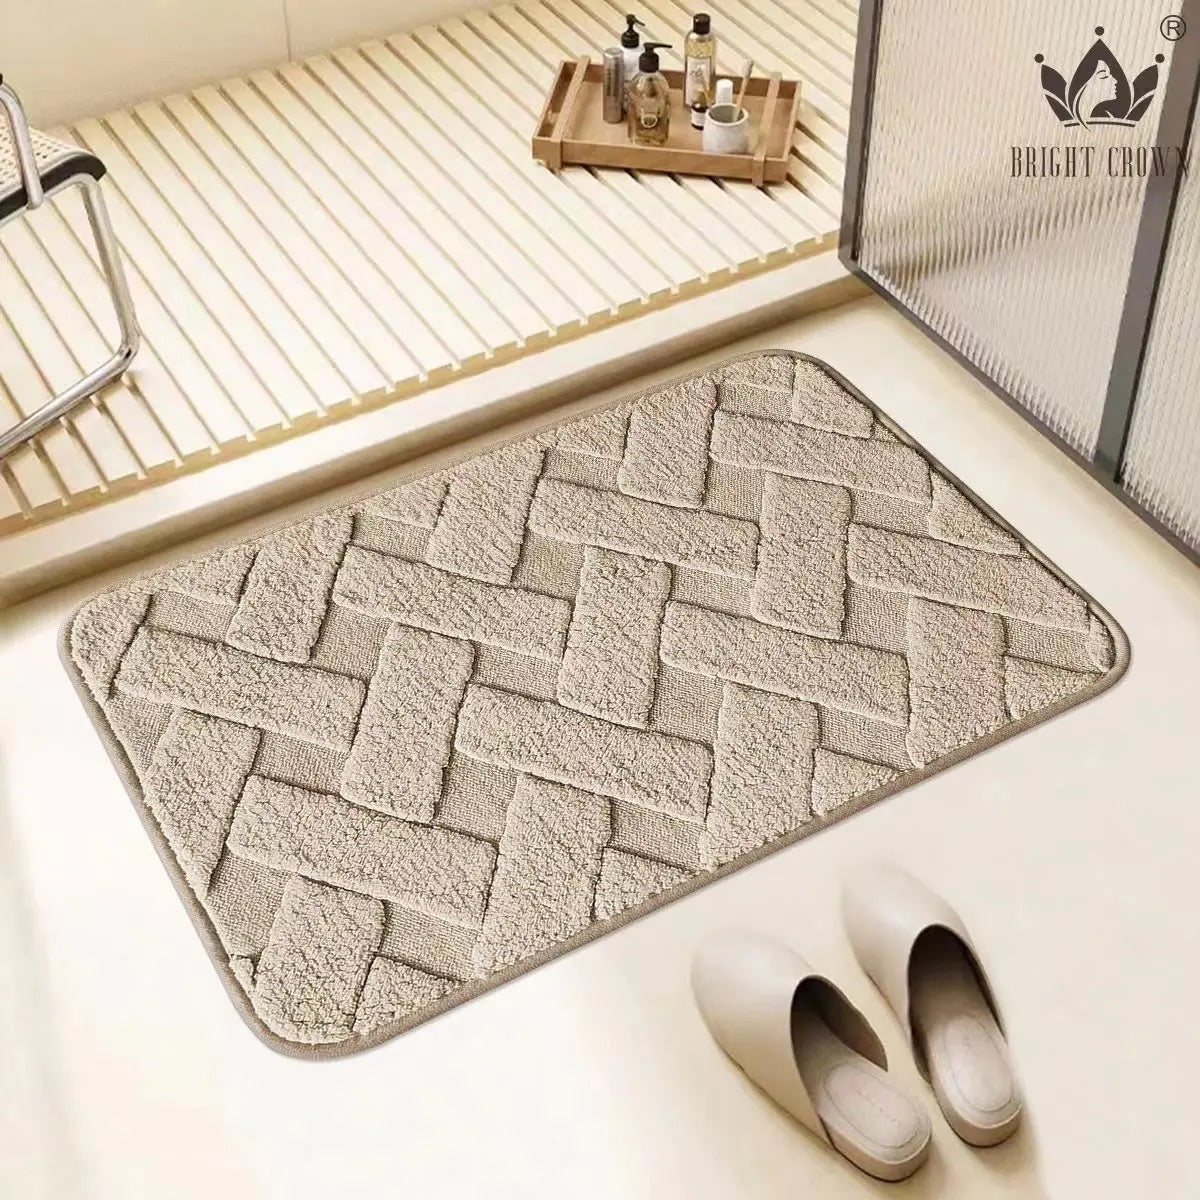 Bathroom mat